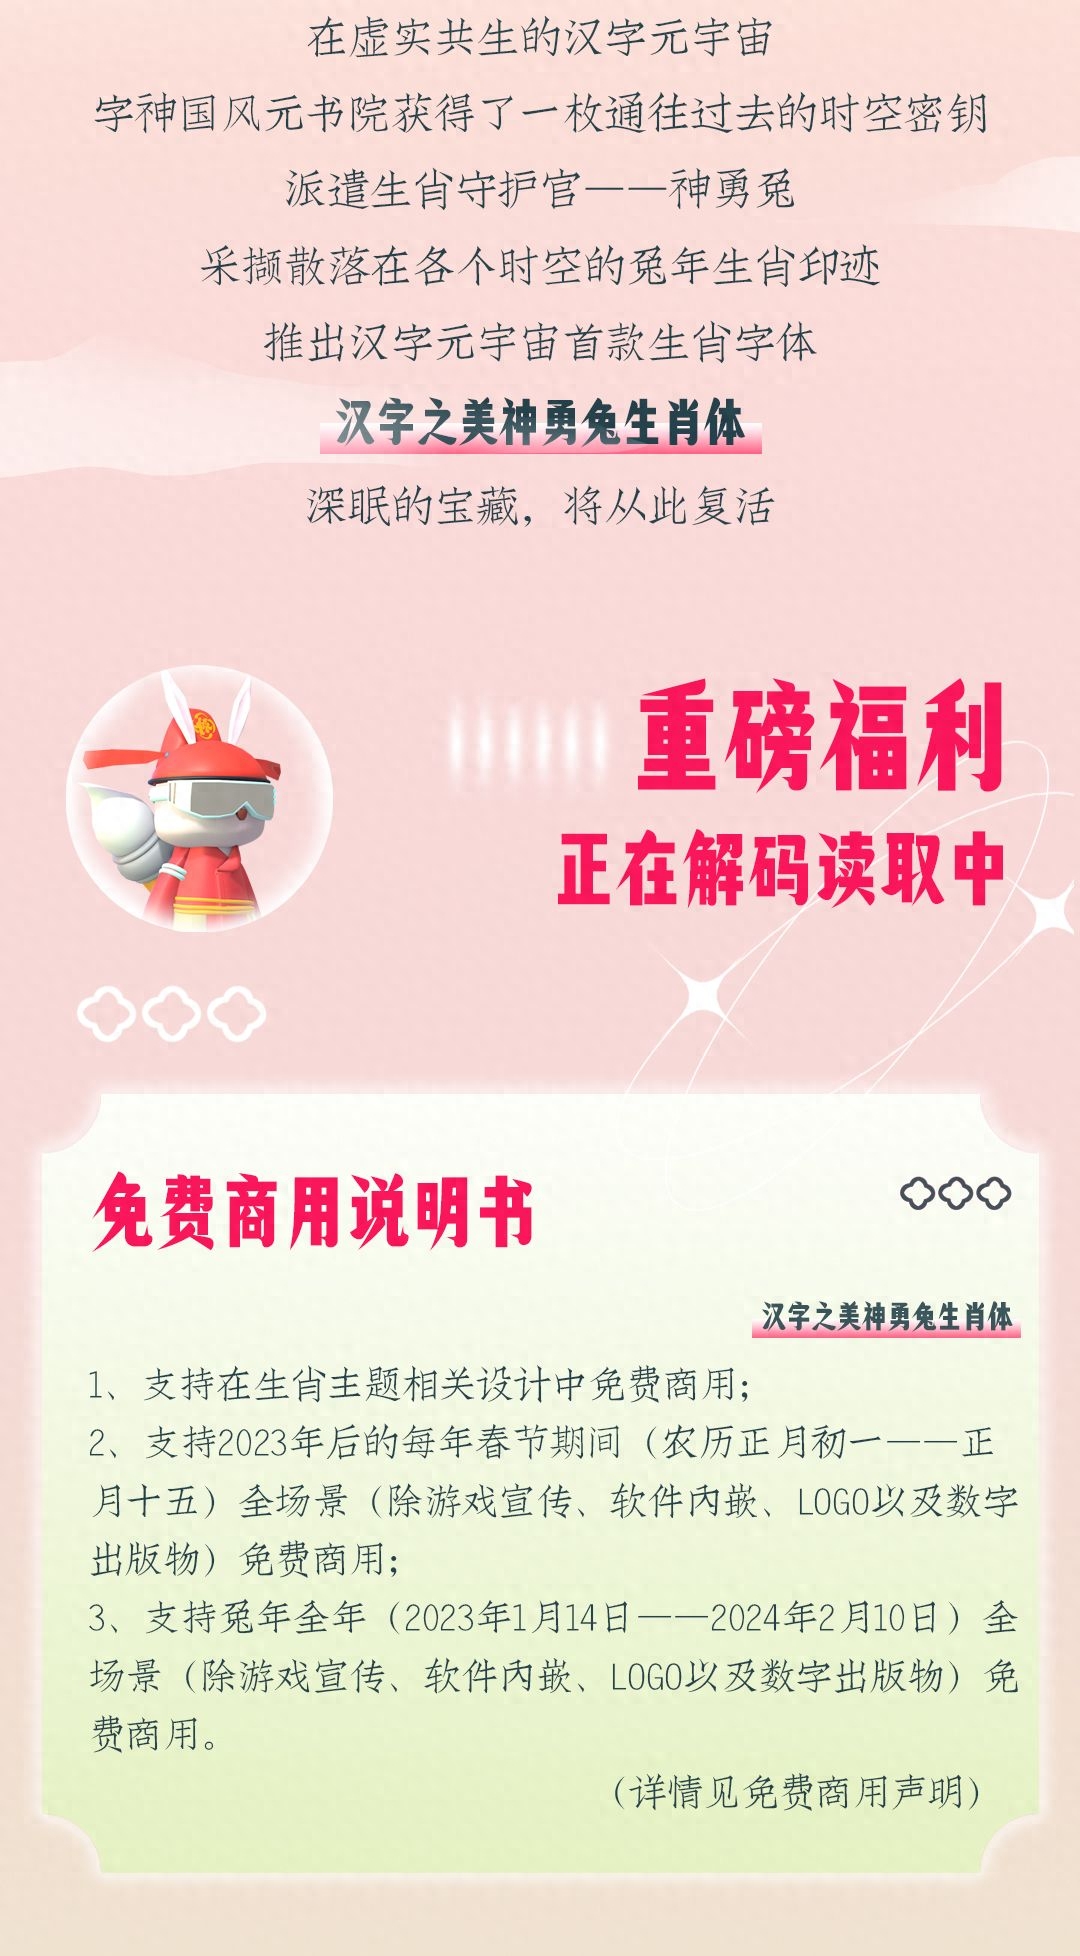 Zodiac font | 2023 free commercial zodiac font - the beauty of Chinese characters Brave Rabbit zodiac font